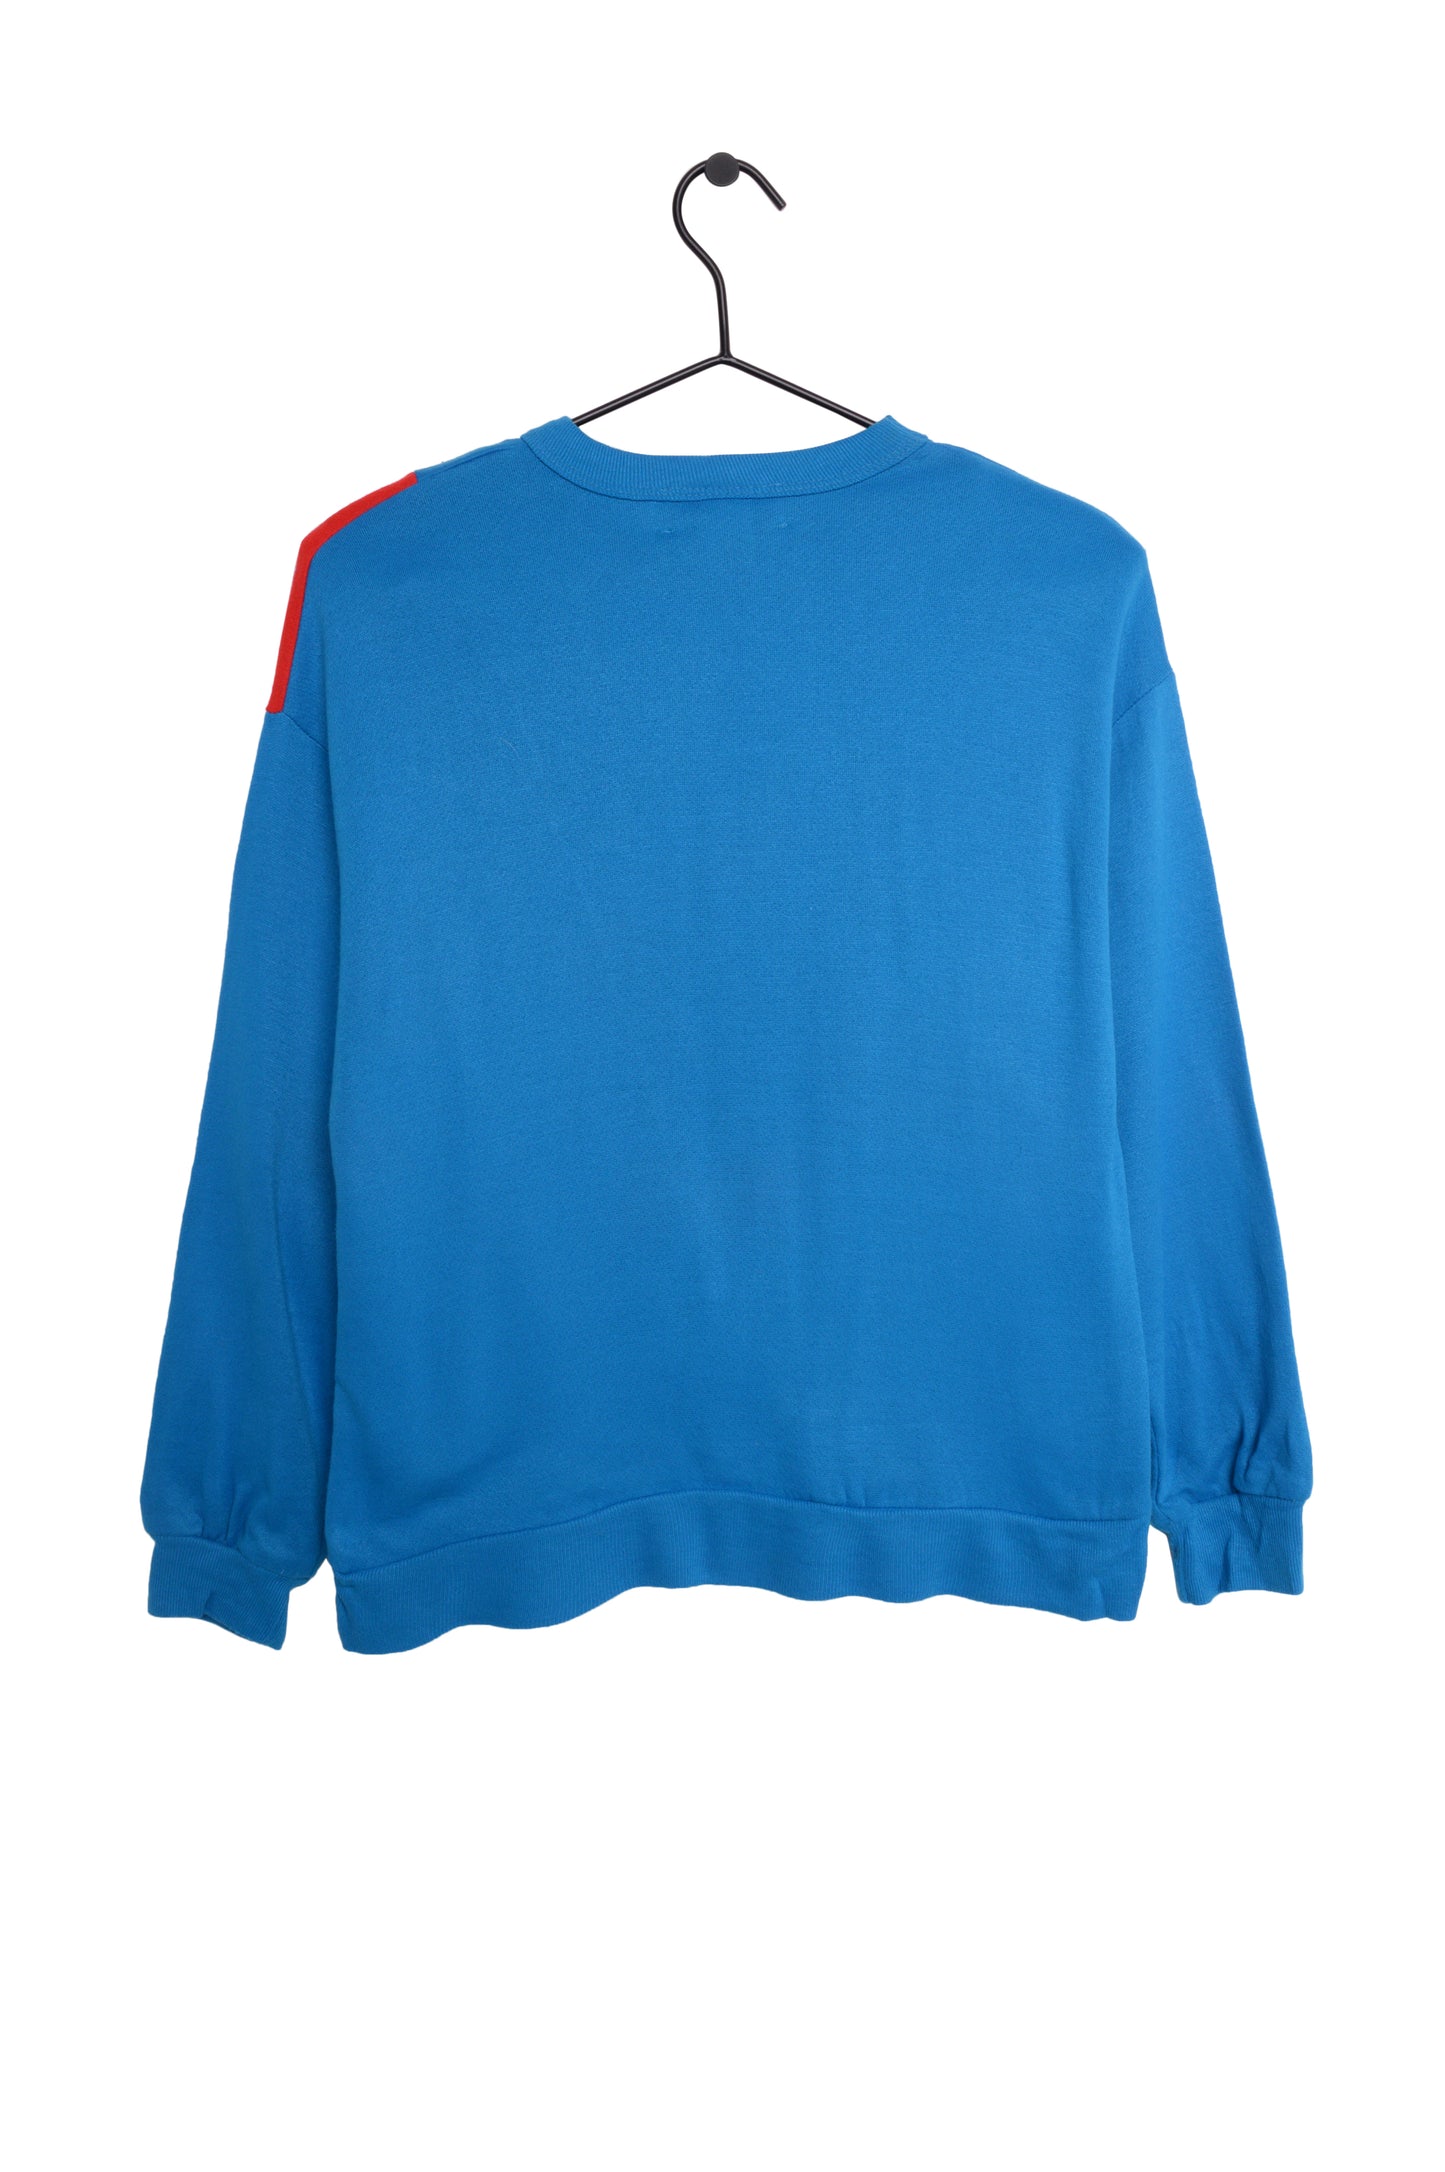 1980s Colorblock Sweatshirt USA